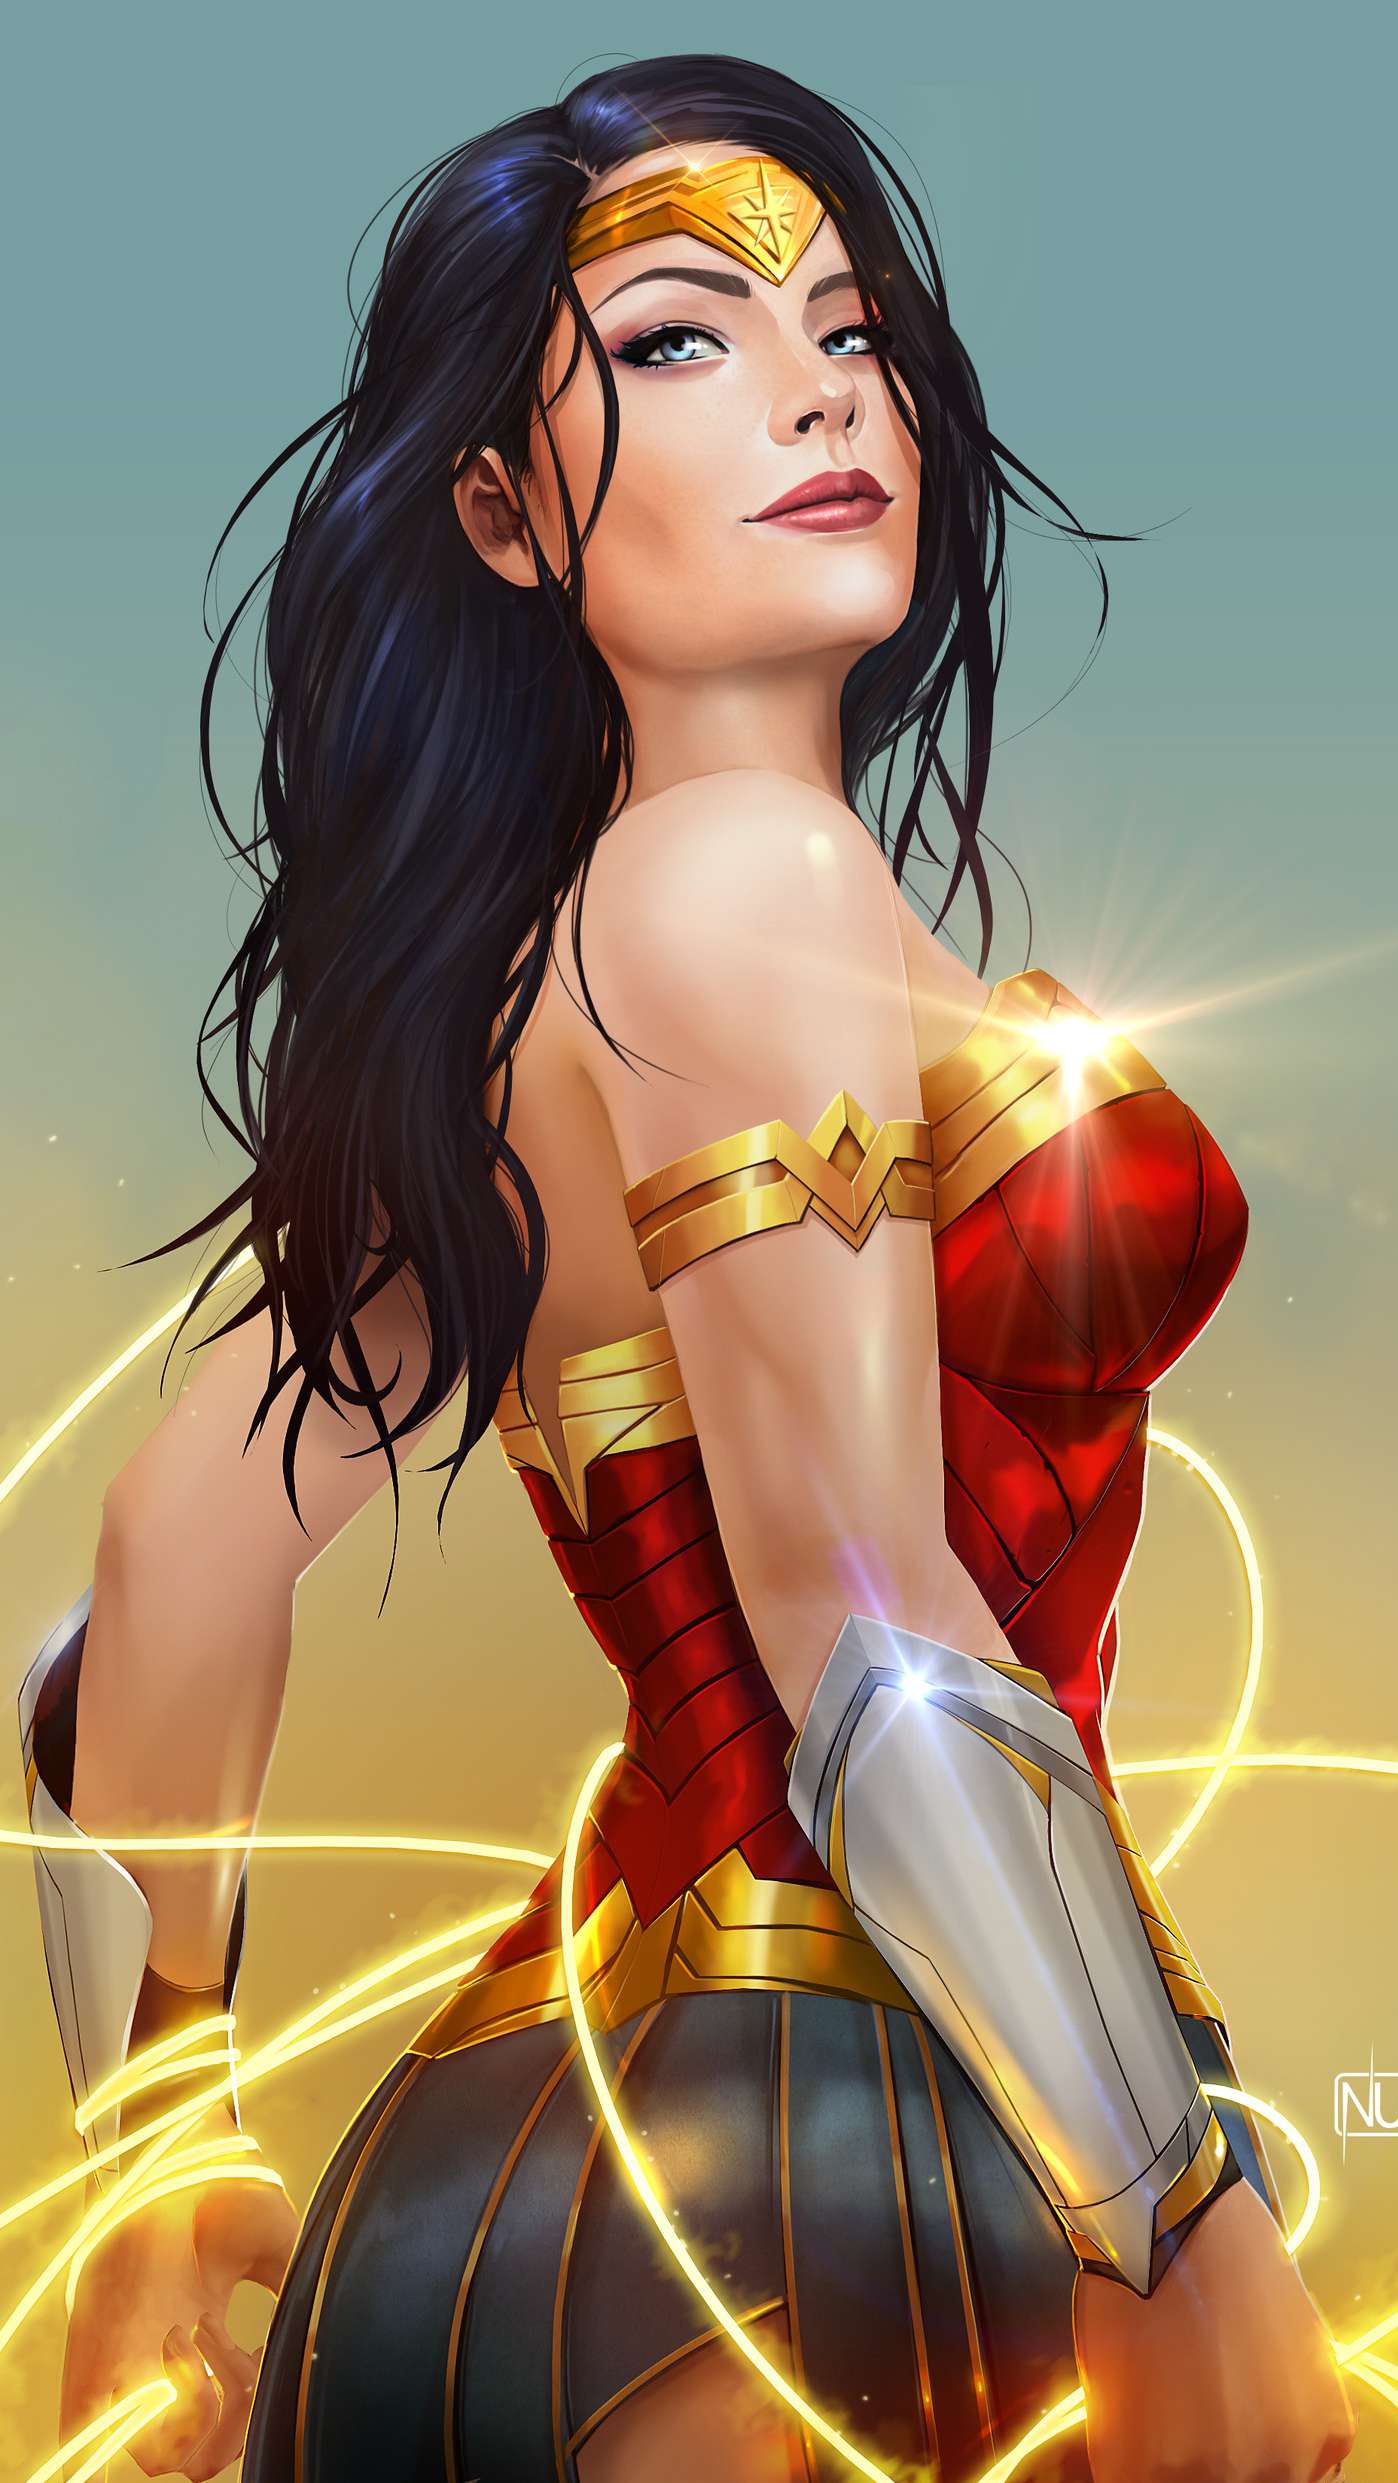 Animated Wonder Woman Cartoon Wallpaperwalpaperlist.com